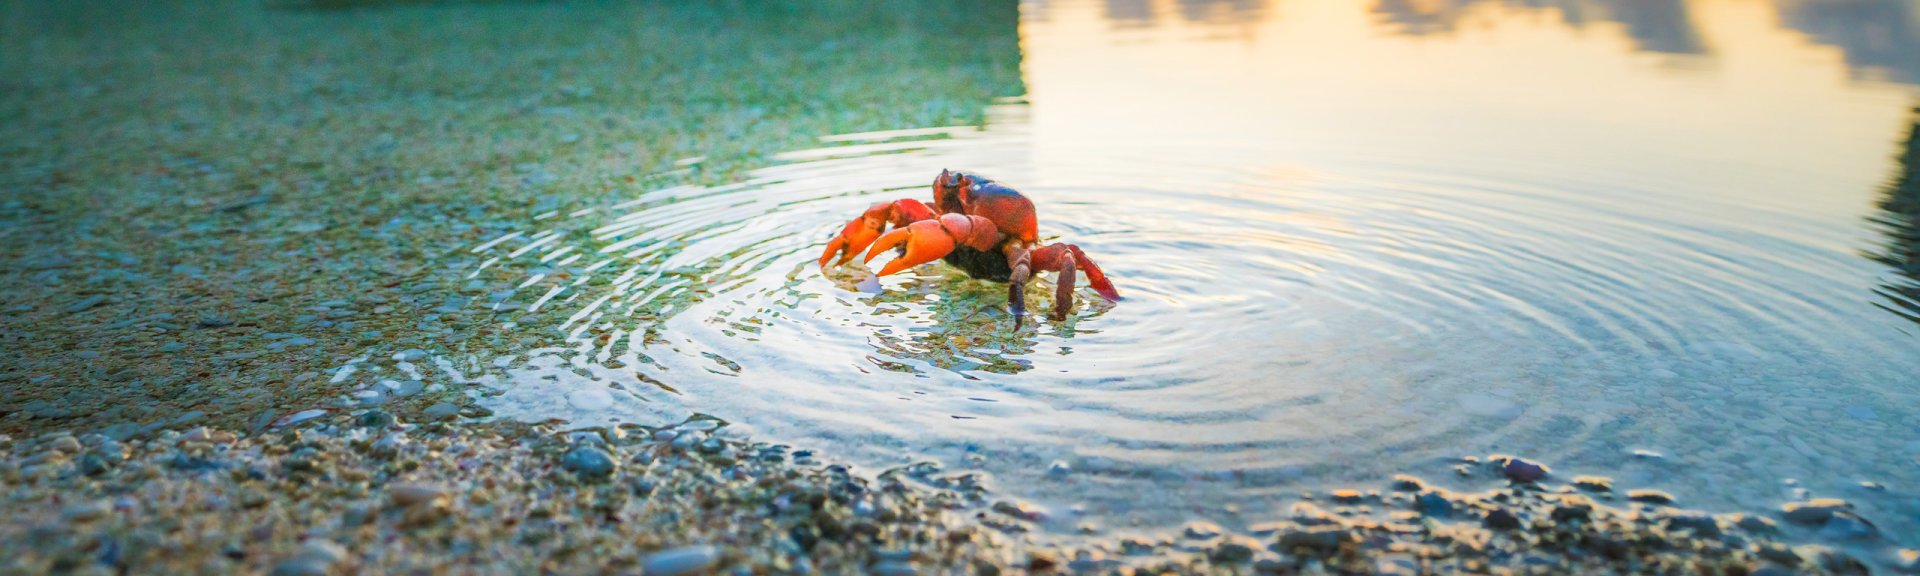 Migrating red crab